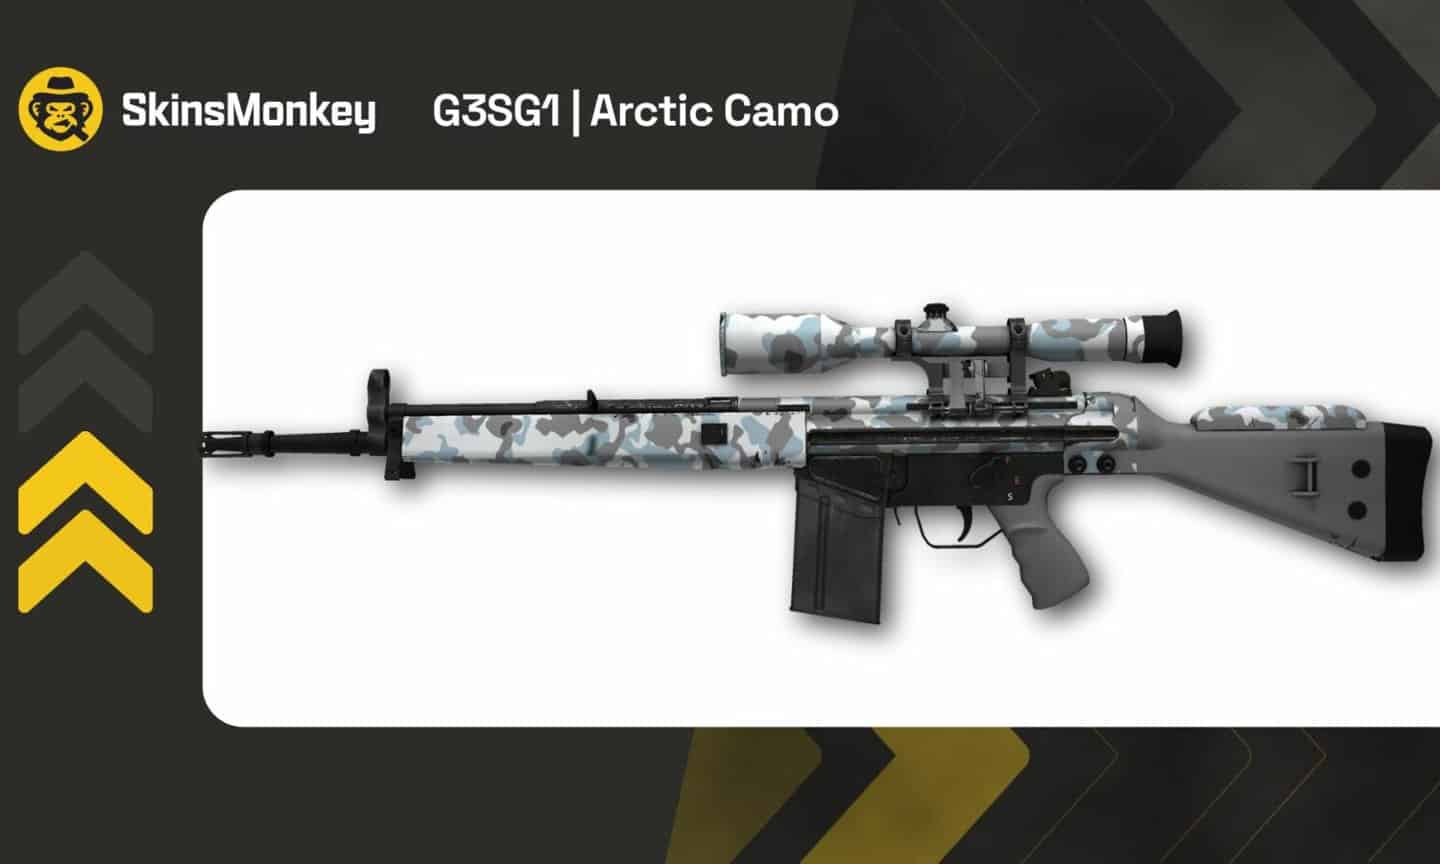 skinsmonkey g3sg1 arctic camo